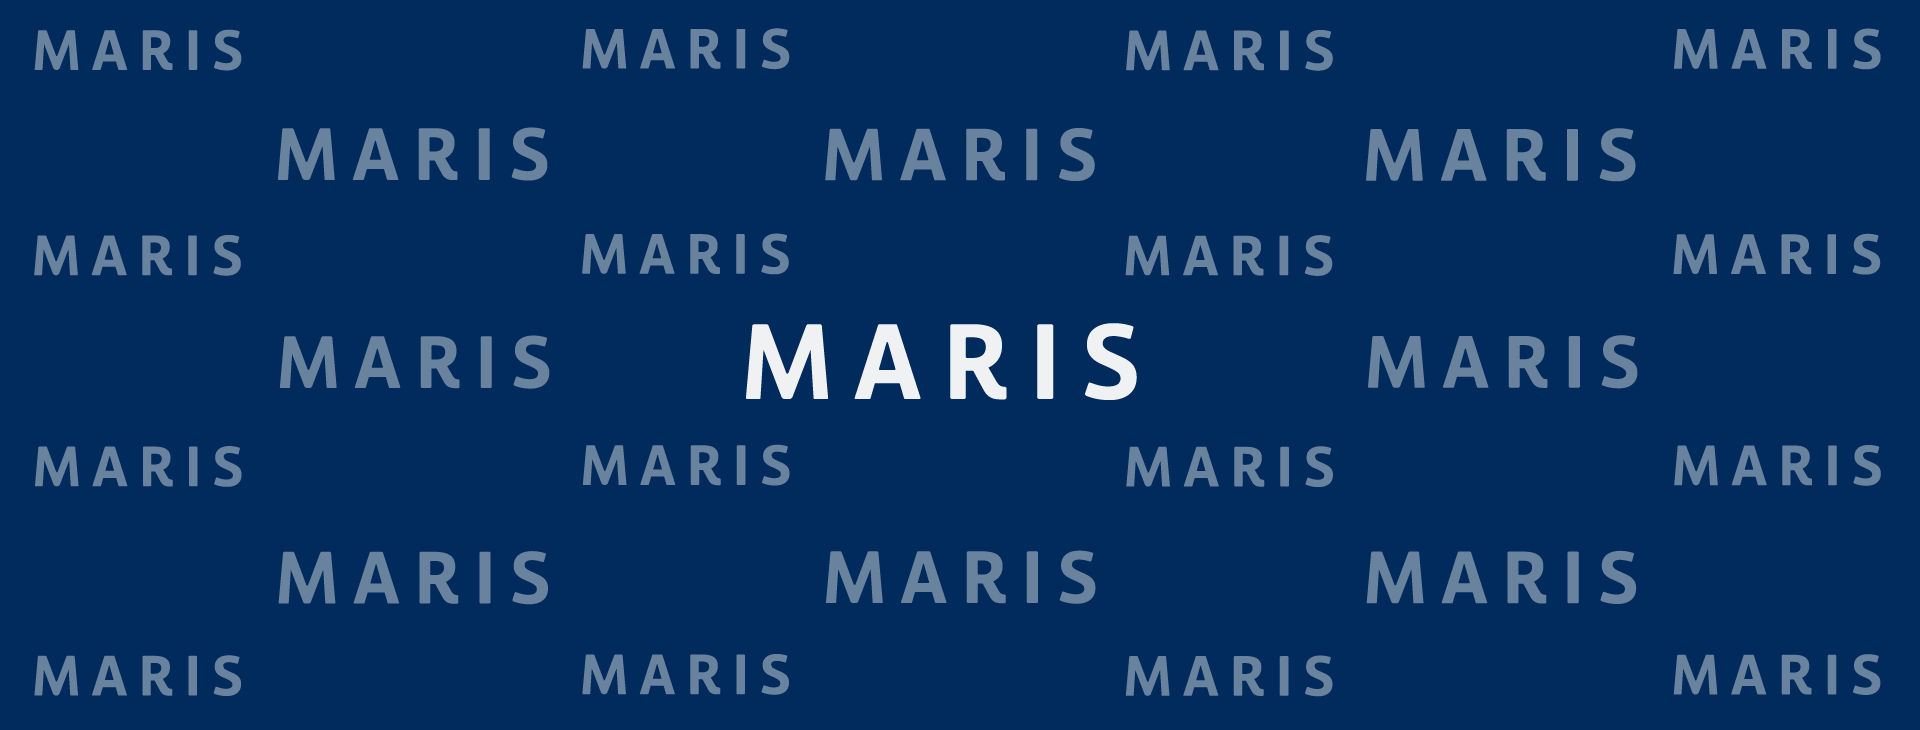 Image for PR: MARIS to Serve Divergent Member Needs